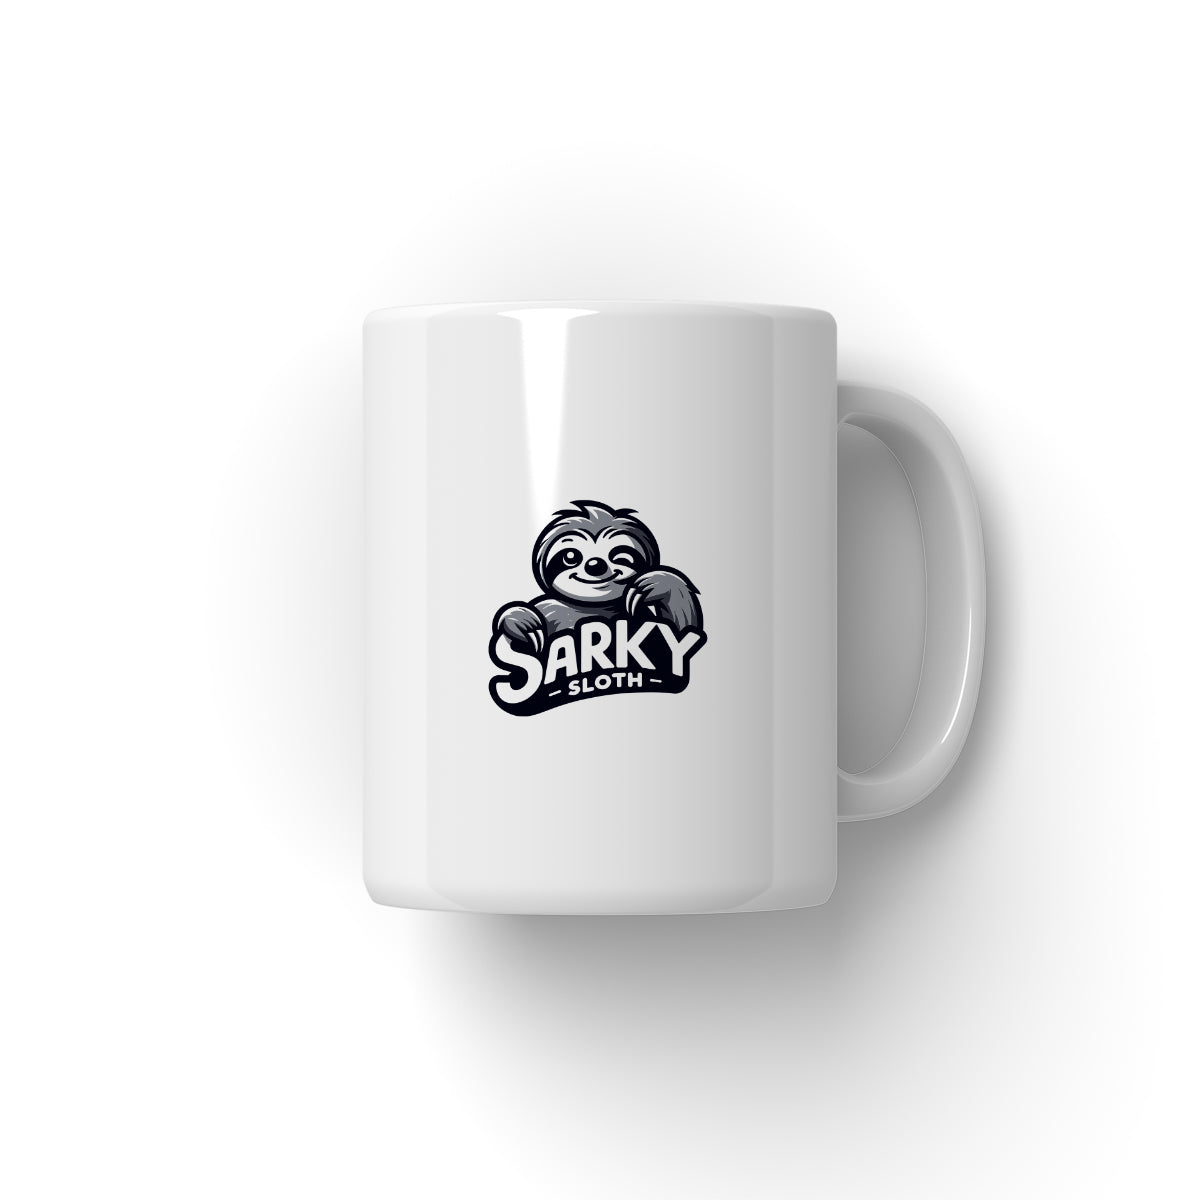 sarky sloth, amusing mugs, funny it mug, witty mug, novelty mugs, funny coffee mug